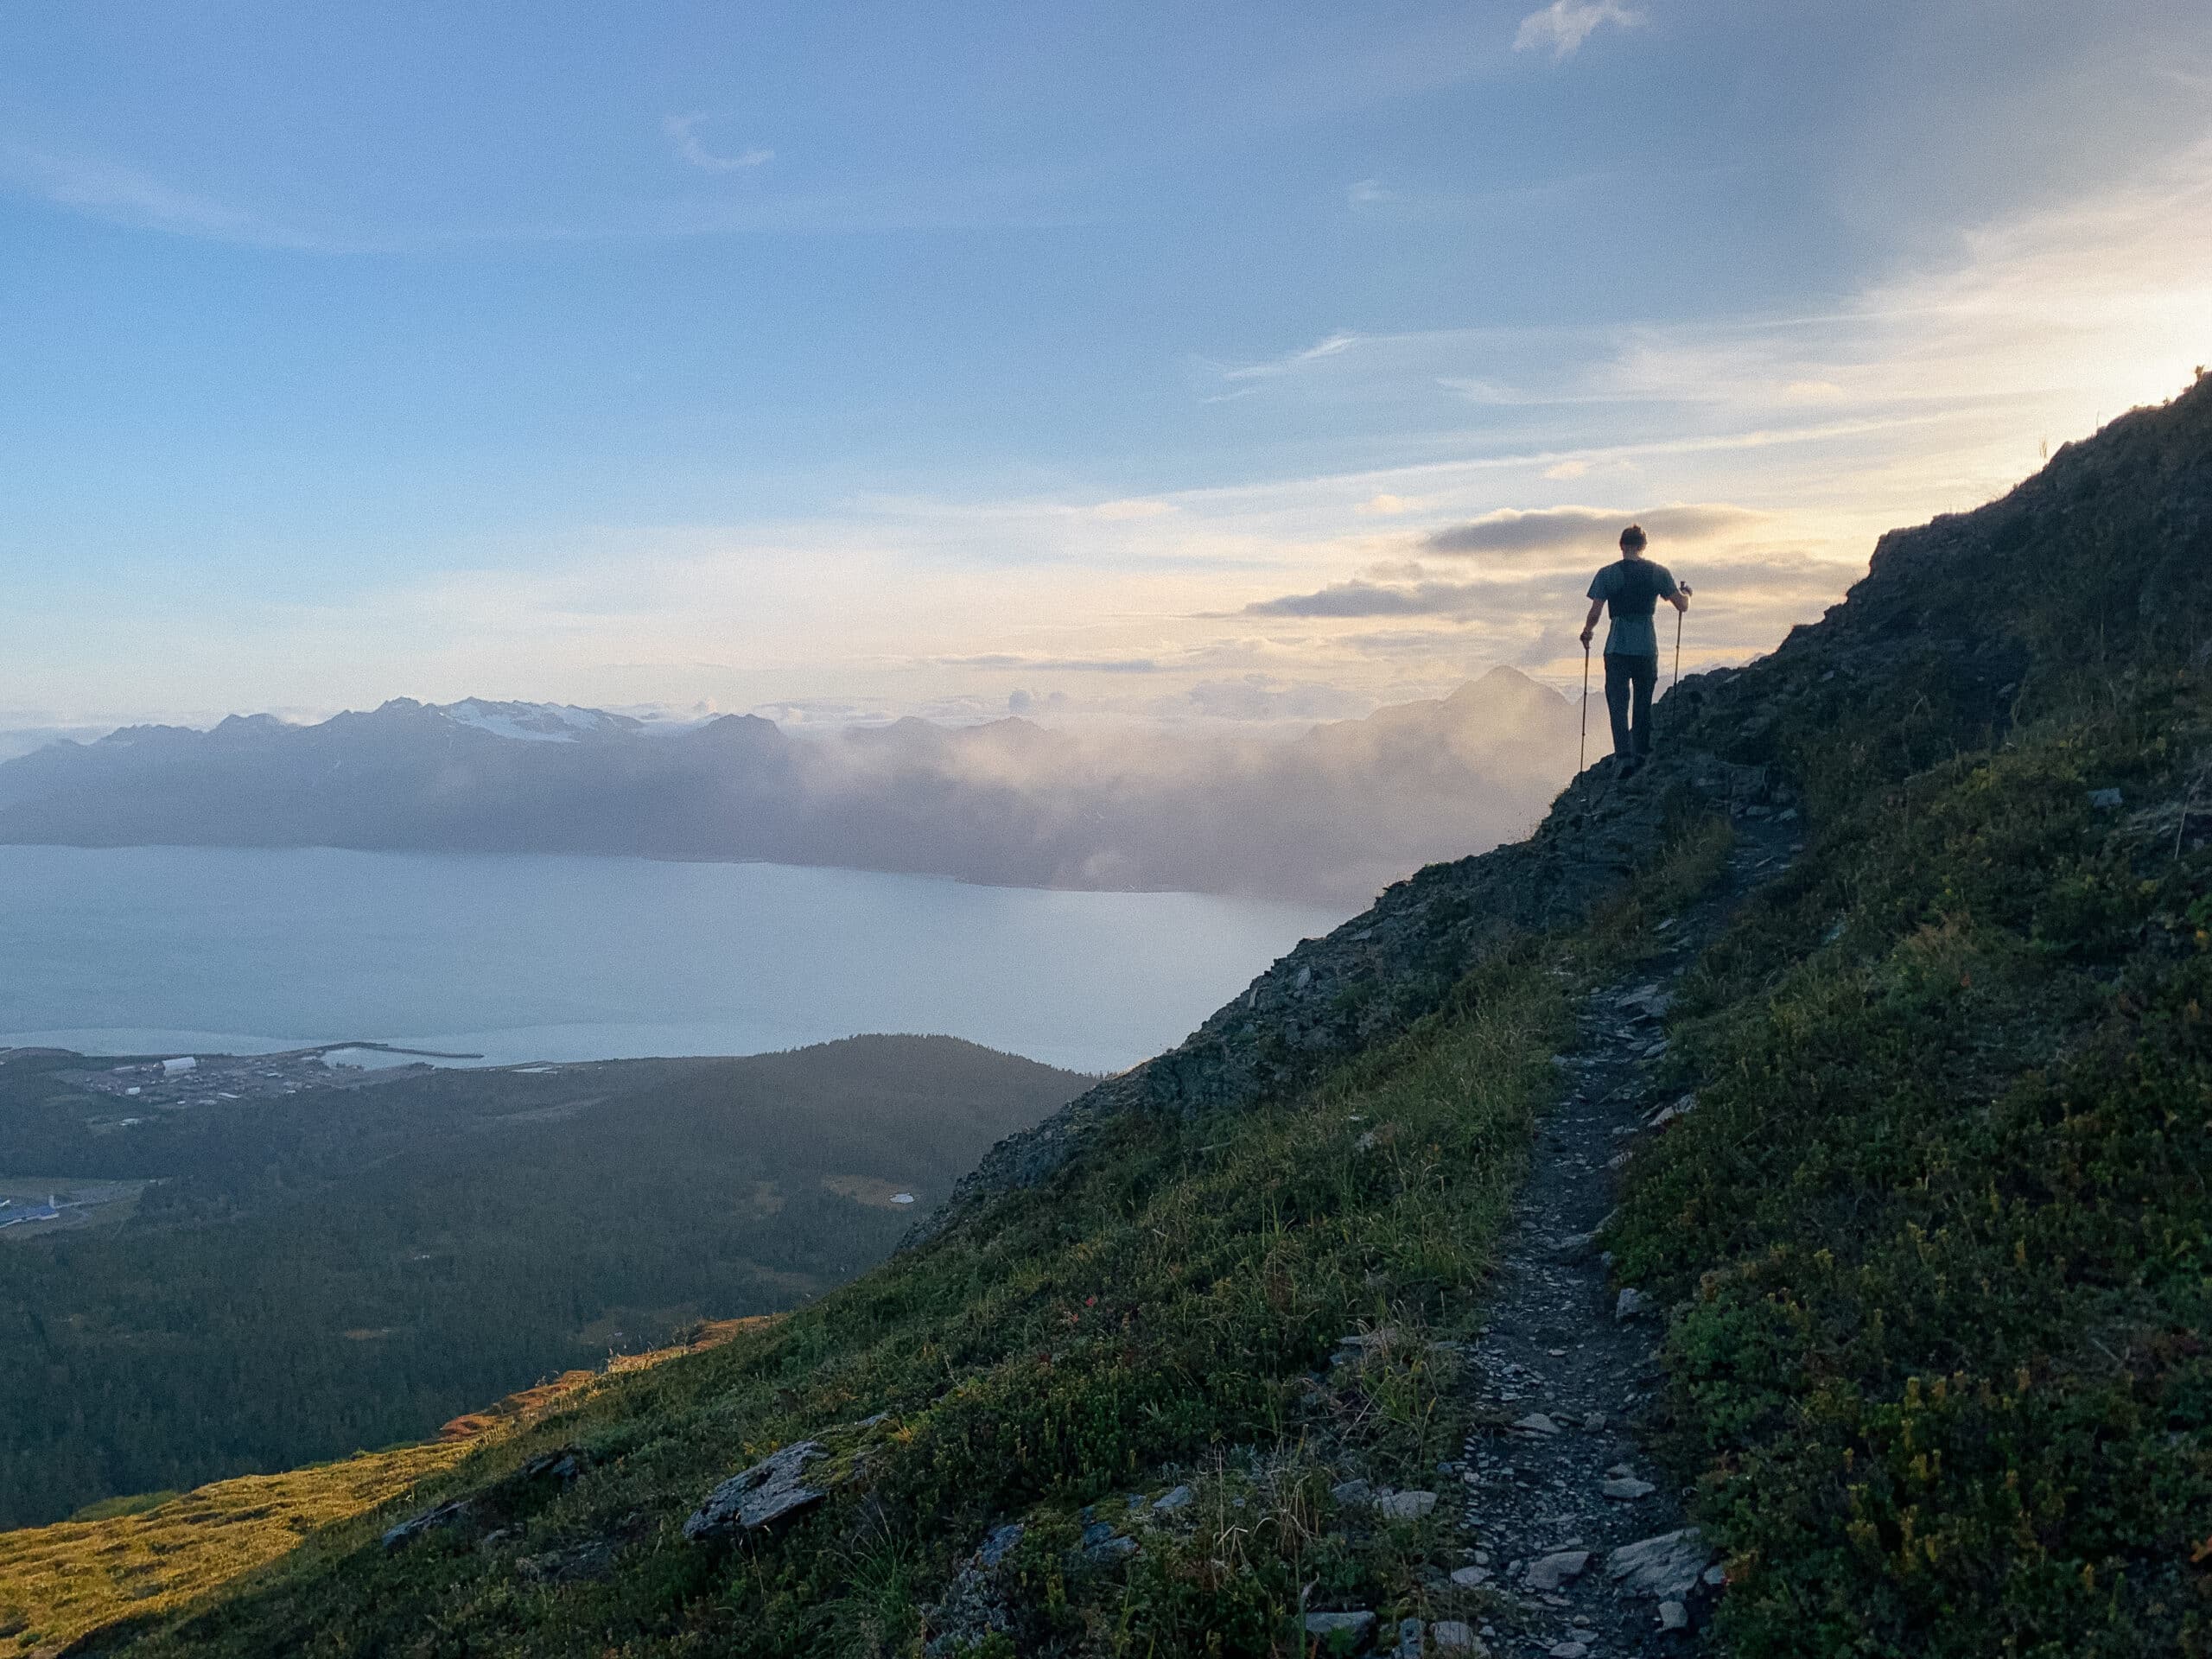 Man hiking on side of mountain overlooking lake